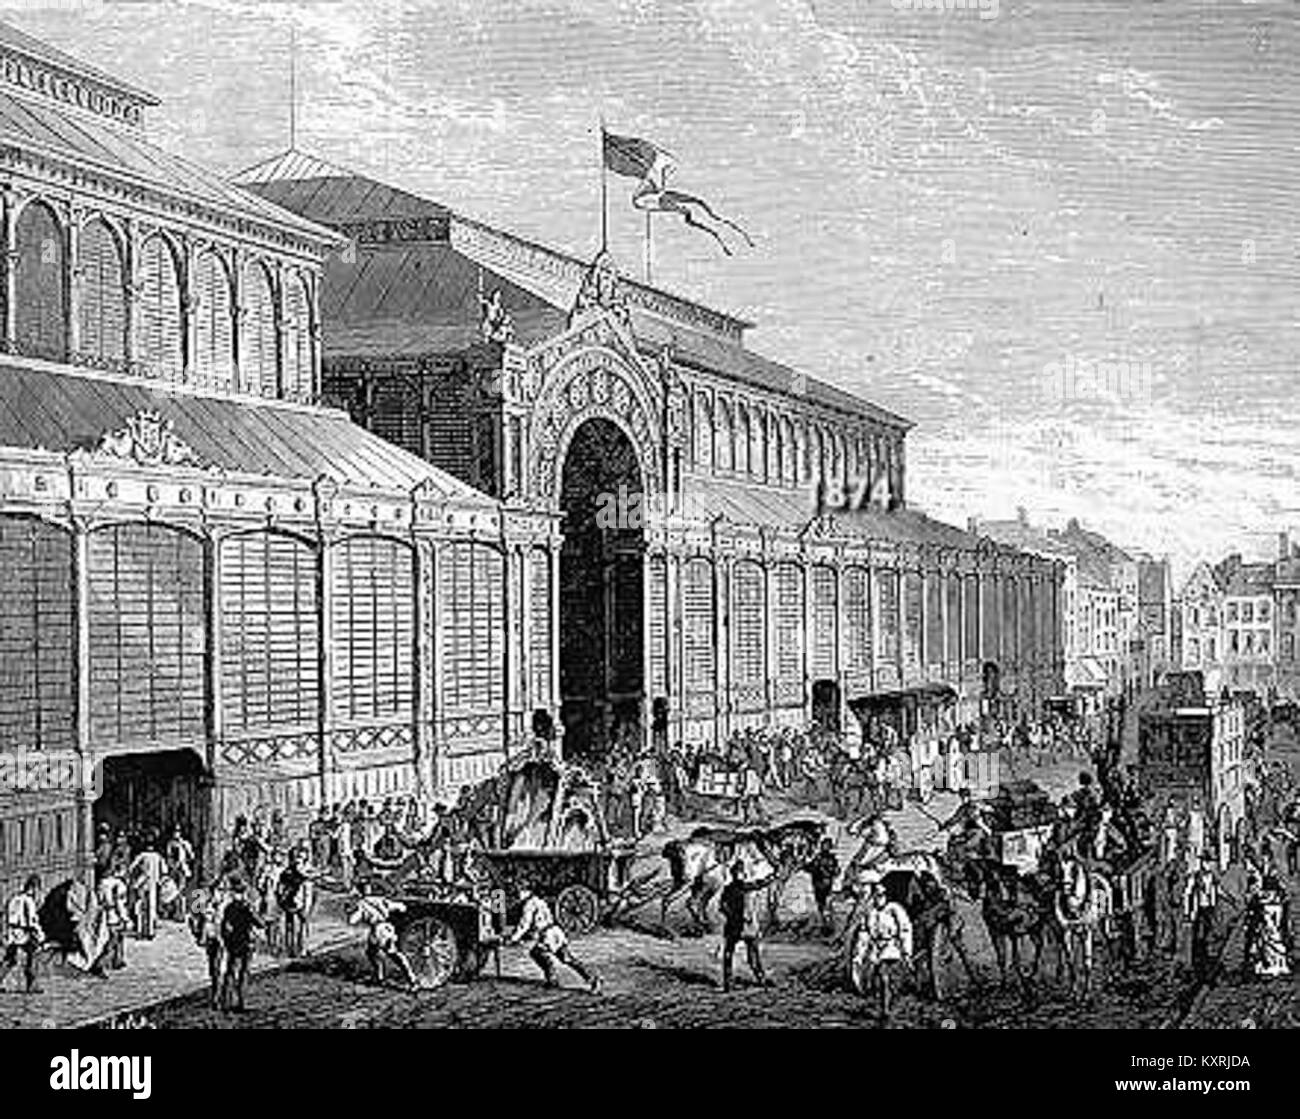 Centrale Hallen-Halles centrales (houtgravure uit Abbildung européenne, 1874) Stockfoto